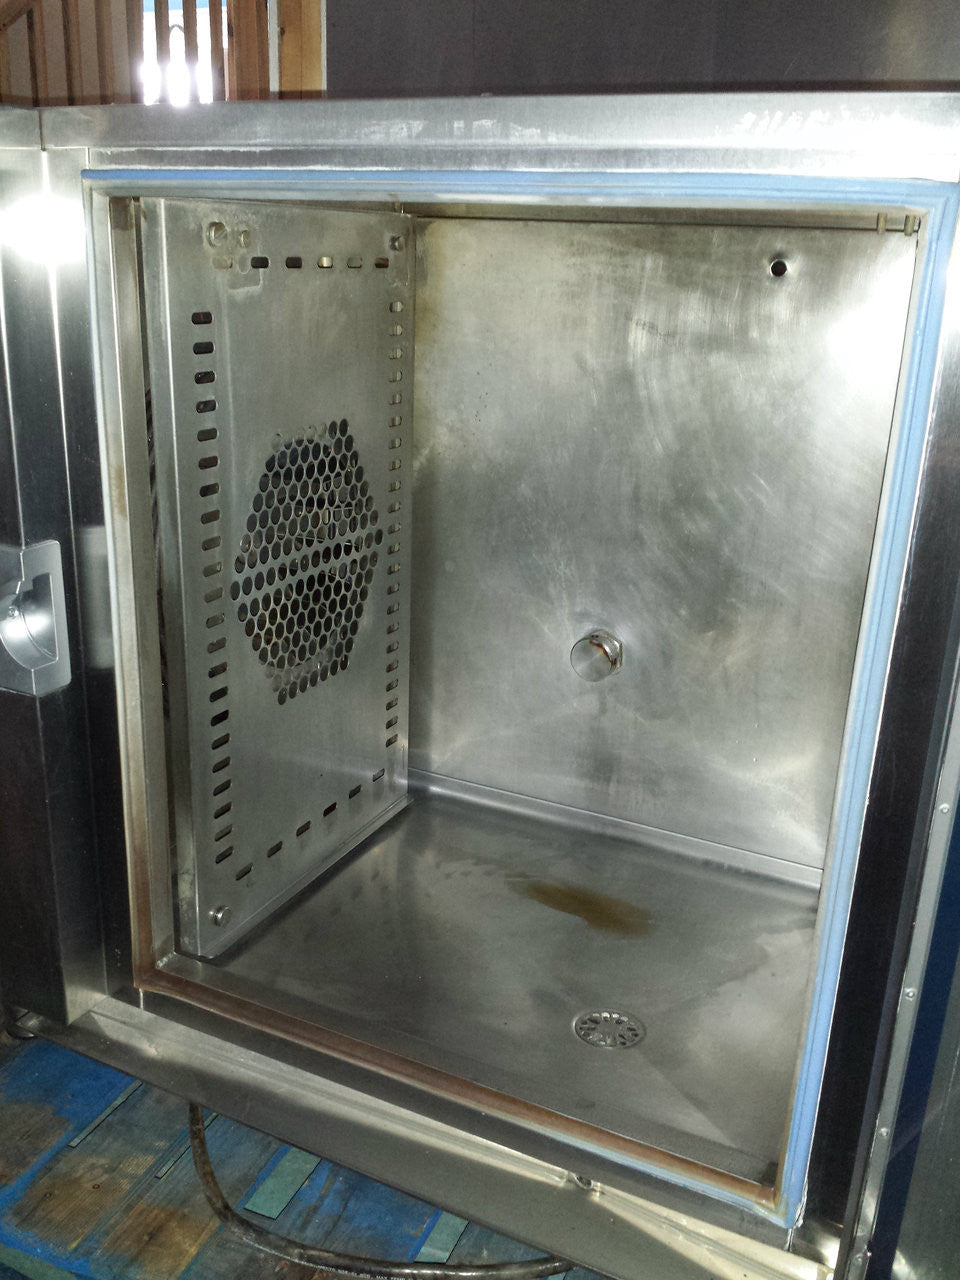 Alto-Sham 10.10ES Electric Combitherm Combi Oven - Preowned -